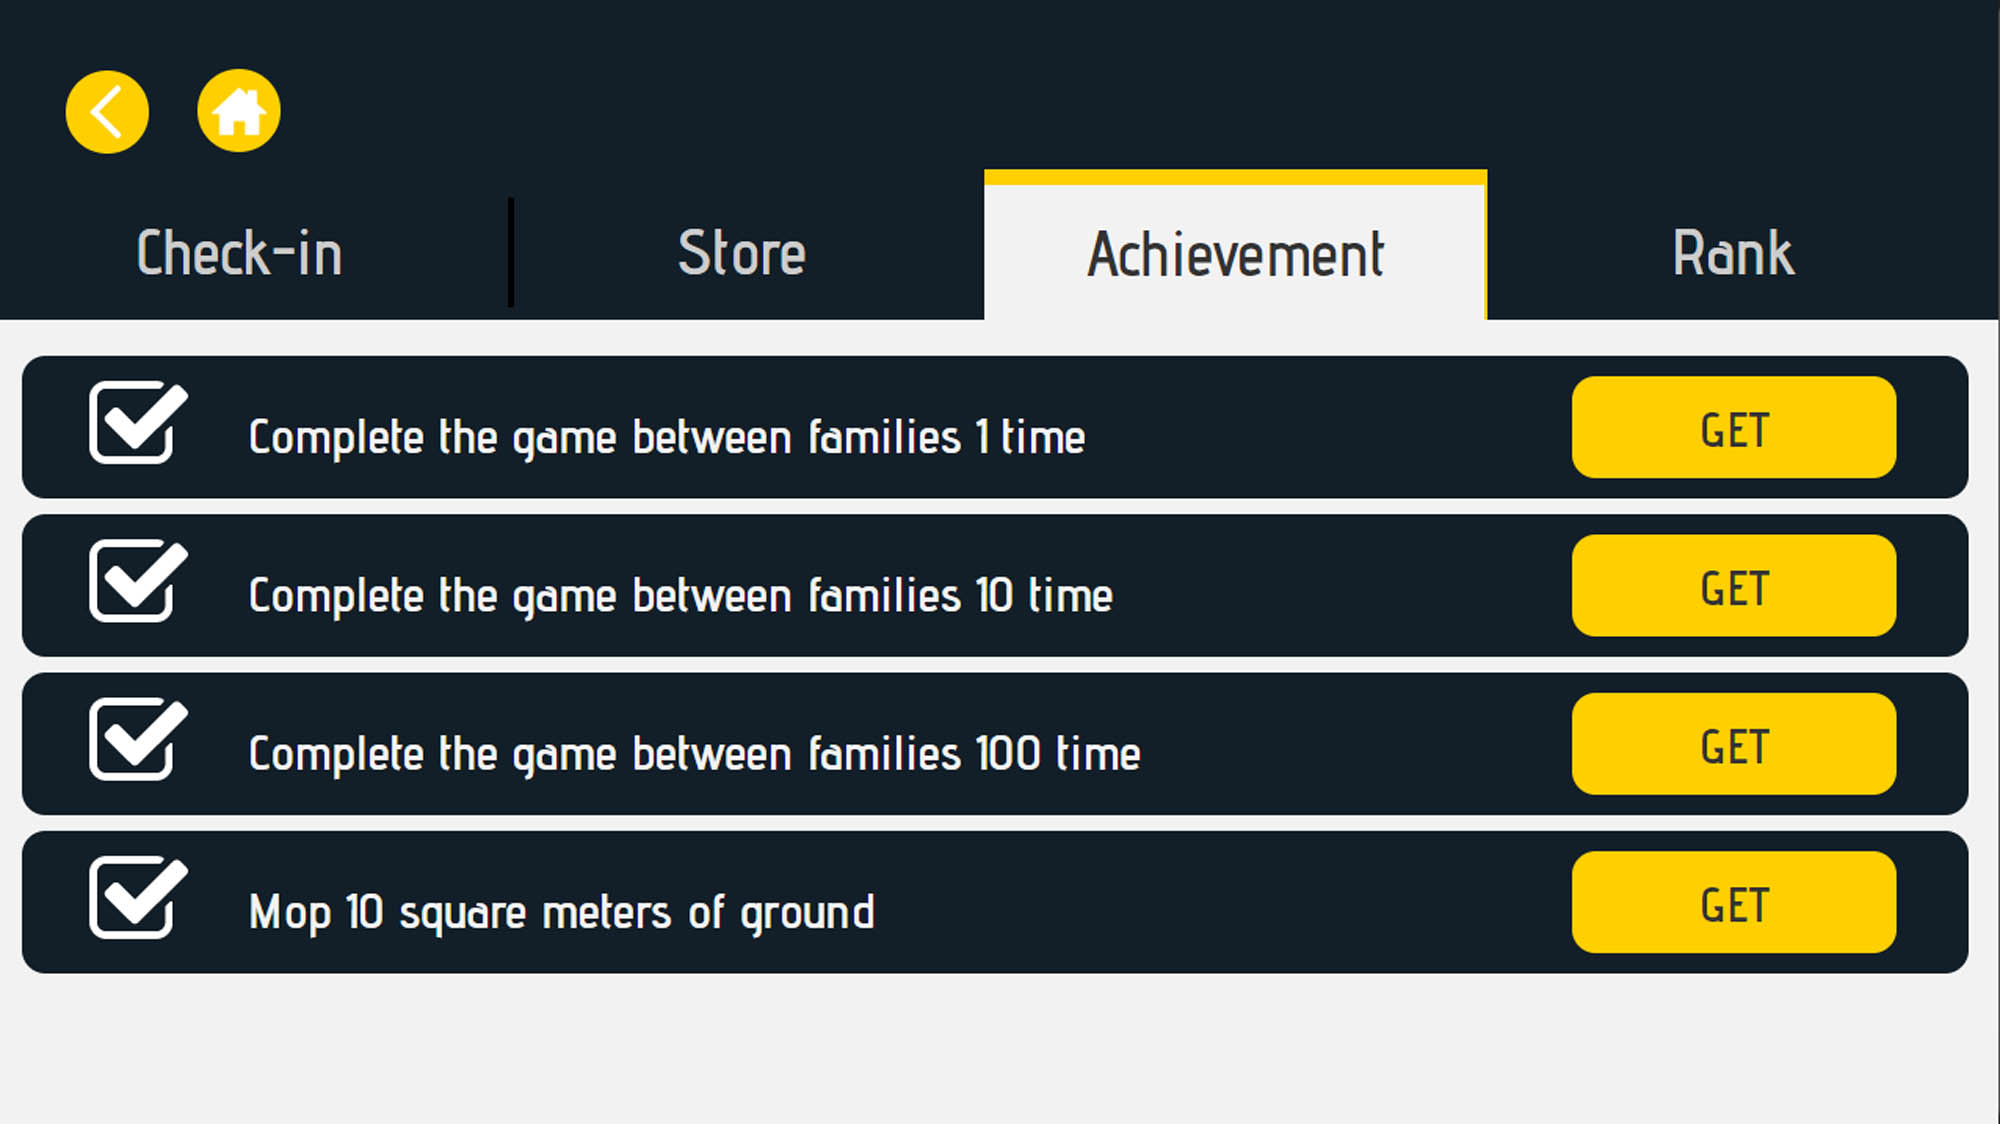 The achievement interface